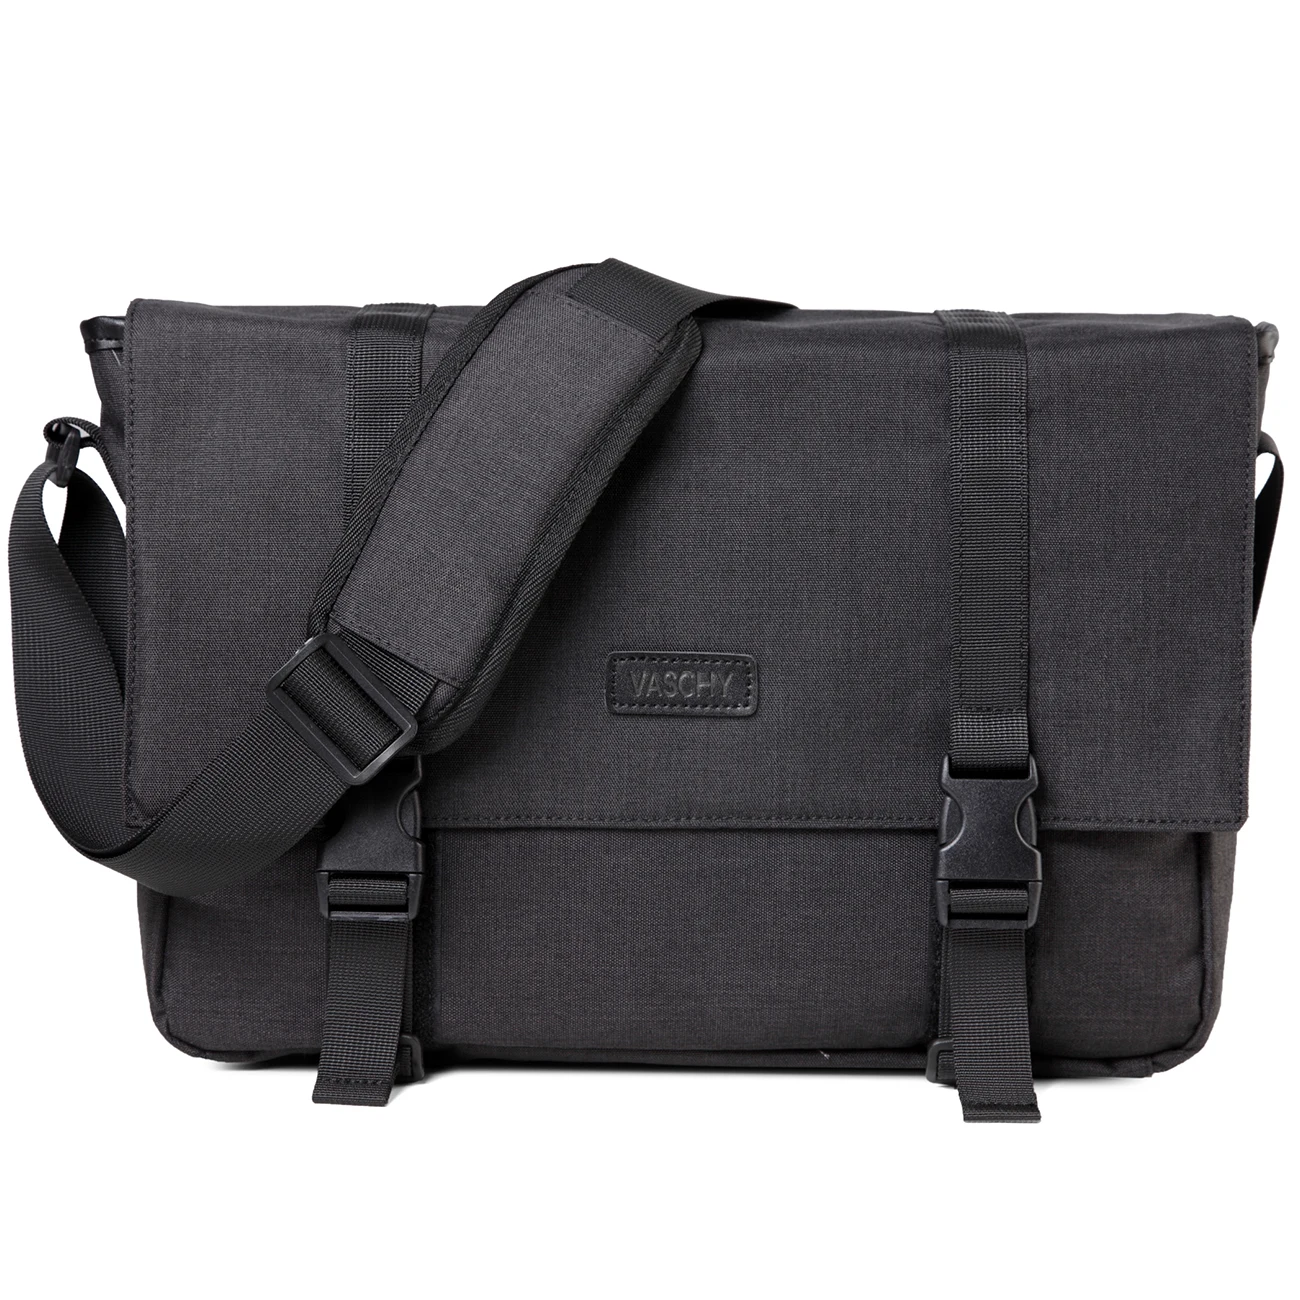 Vaschy Messenger Bag Water Resistant Slim Crossbody Laptop Shoulder Bag for Men Women Fits 14in Laptop for Work,School,Office